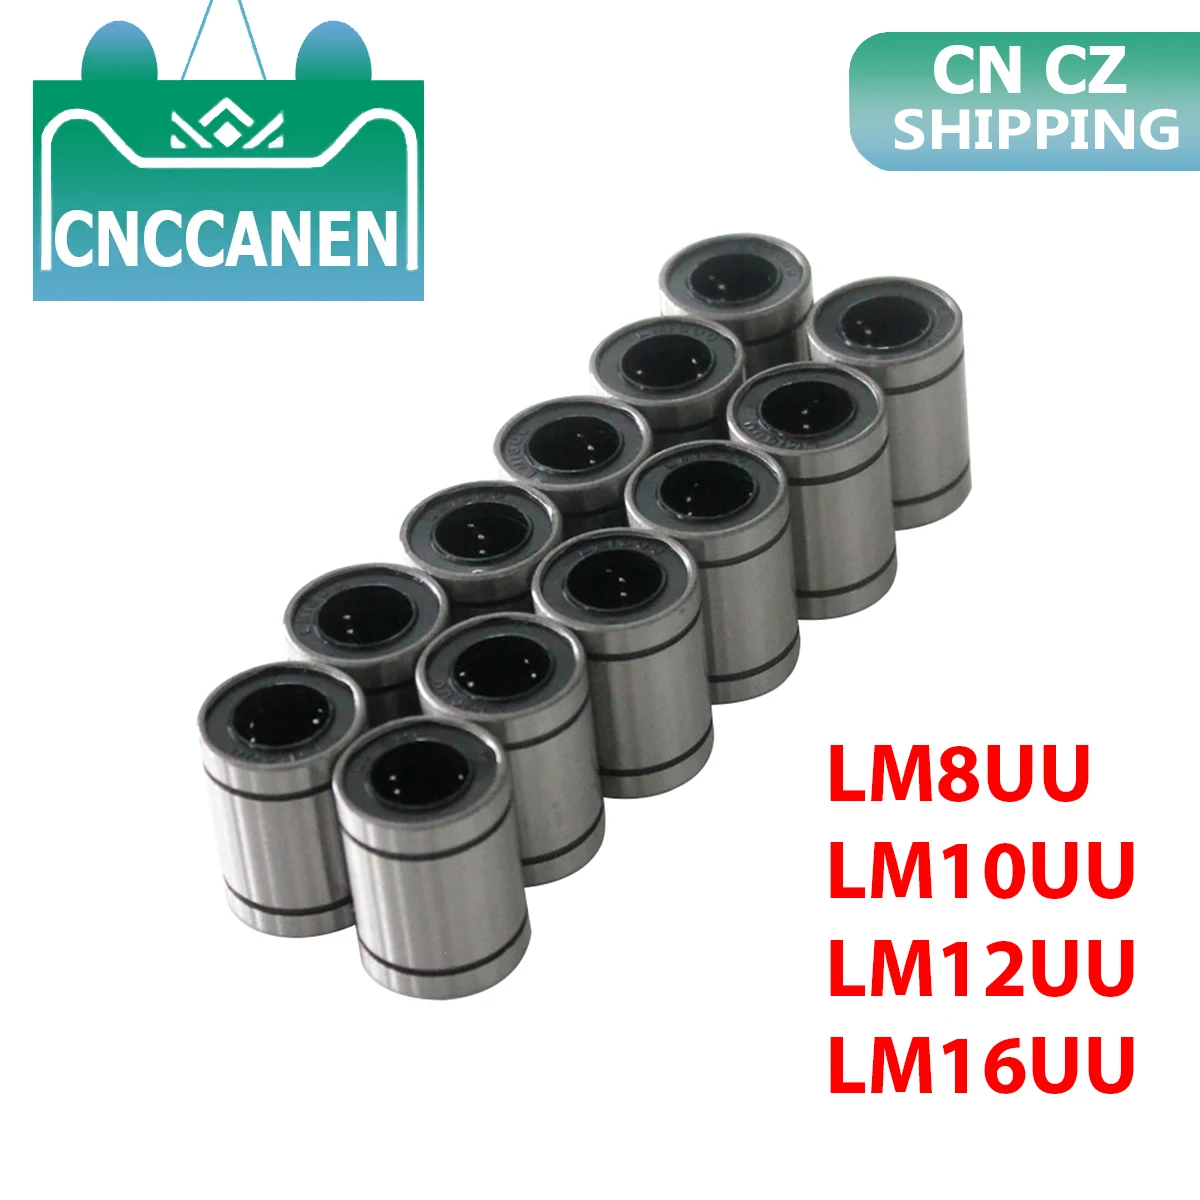 LM8UU/LM12UU Linear Ball Bearing Bushings Motion Machinery For CNC 12Pcs 